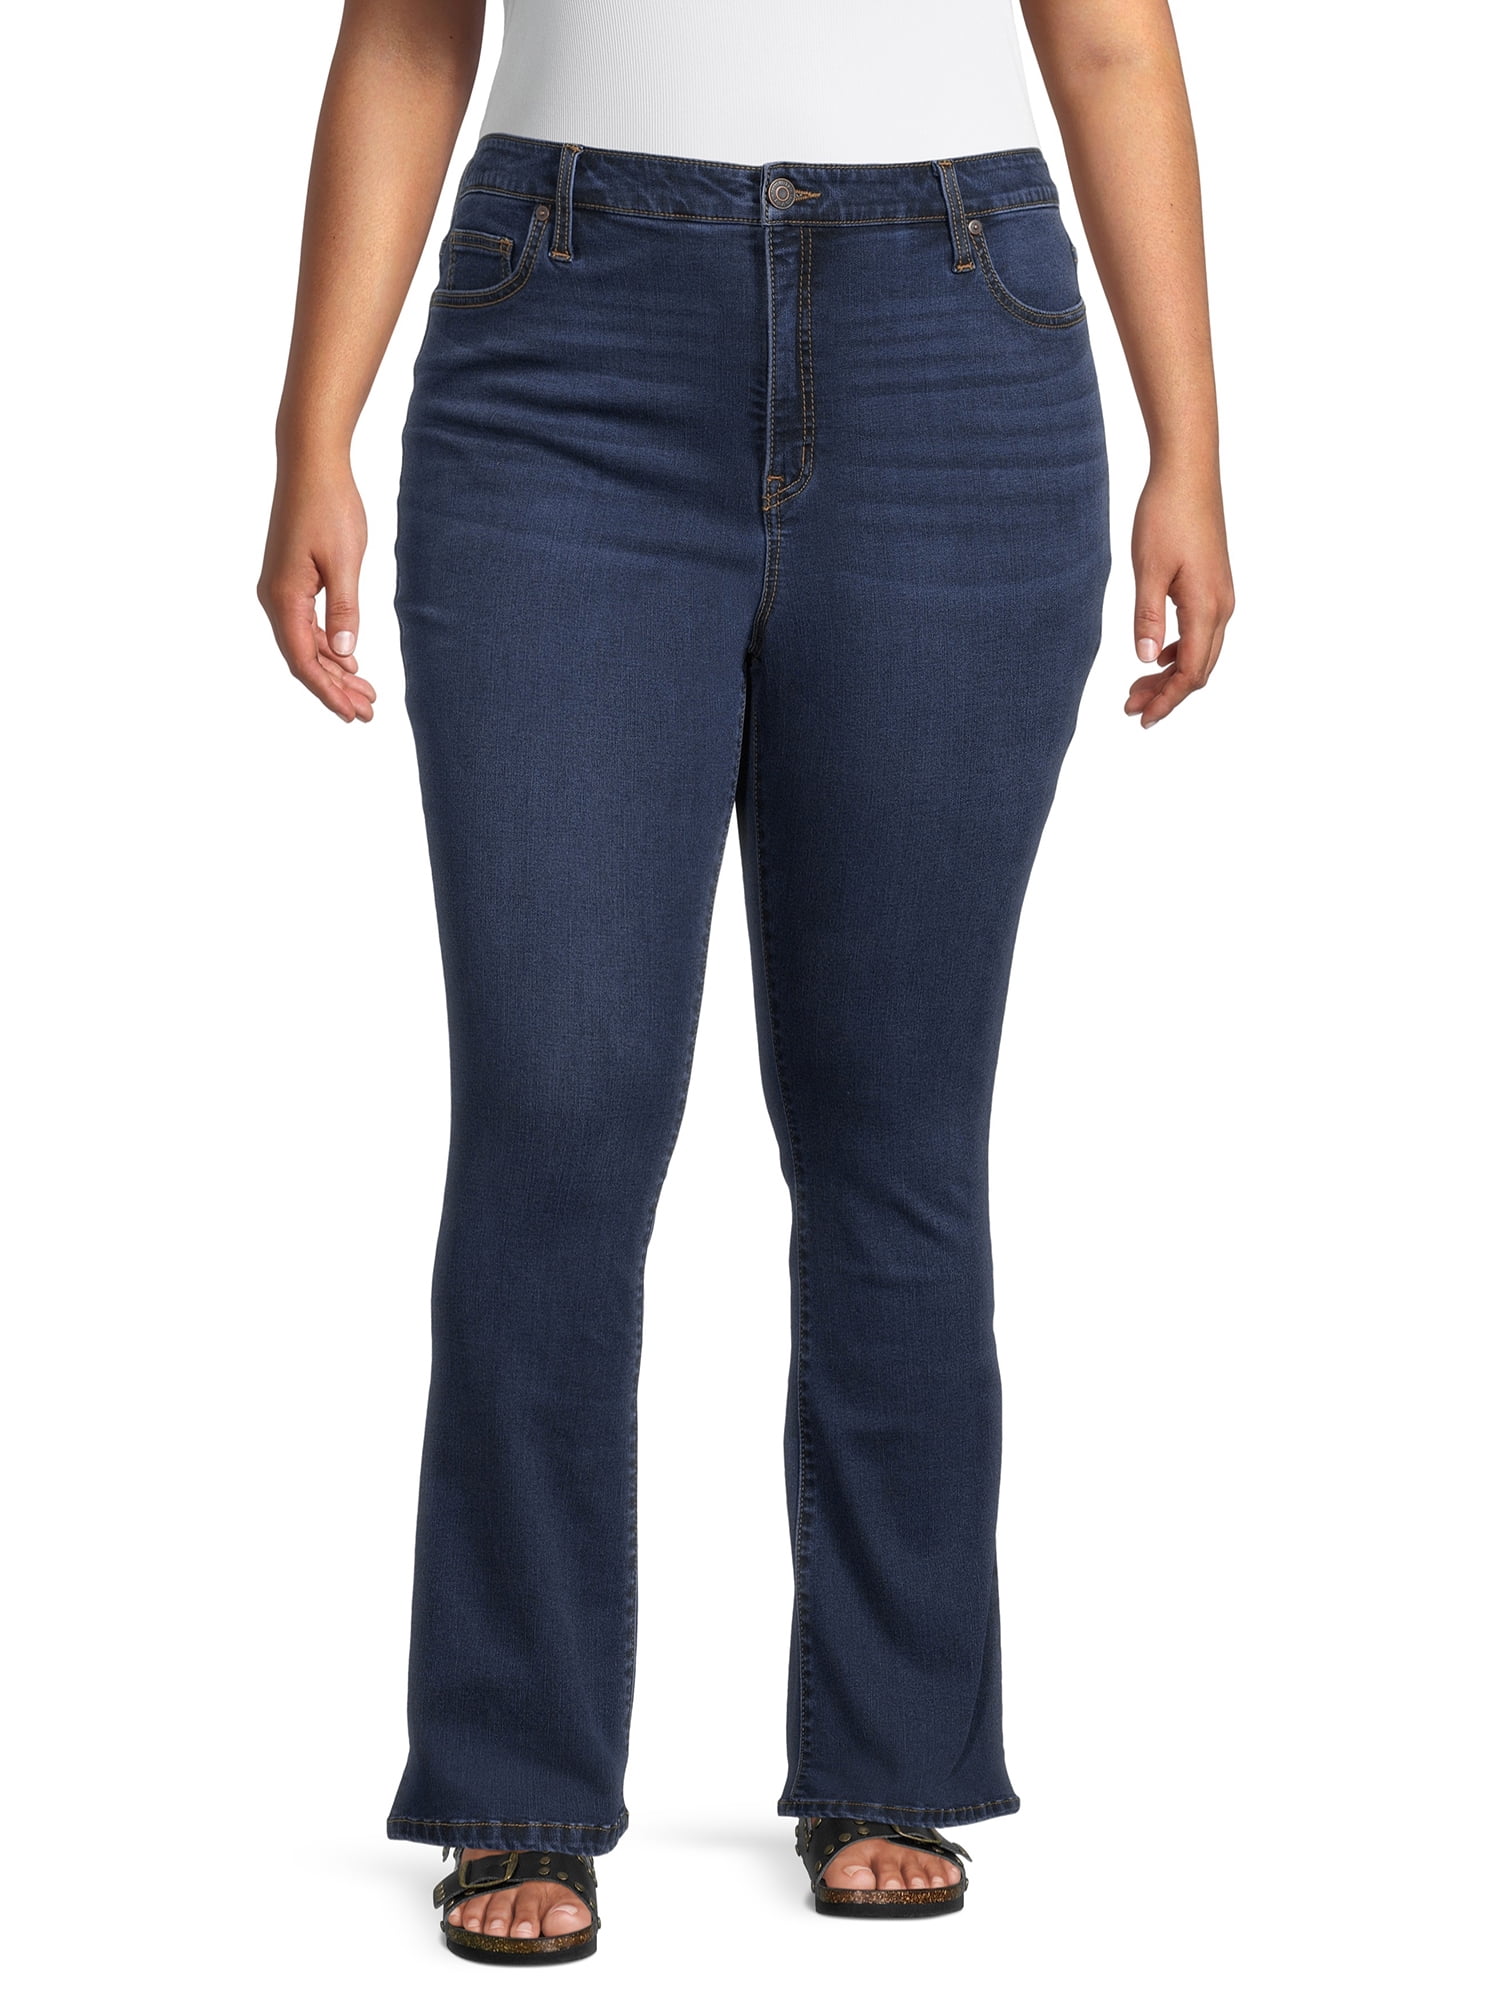 Shop Terra & Sky Women's Plus Size High Waist Bootcut Jeans - Great ...